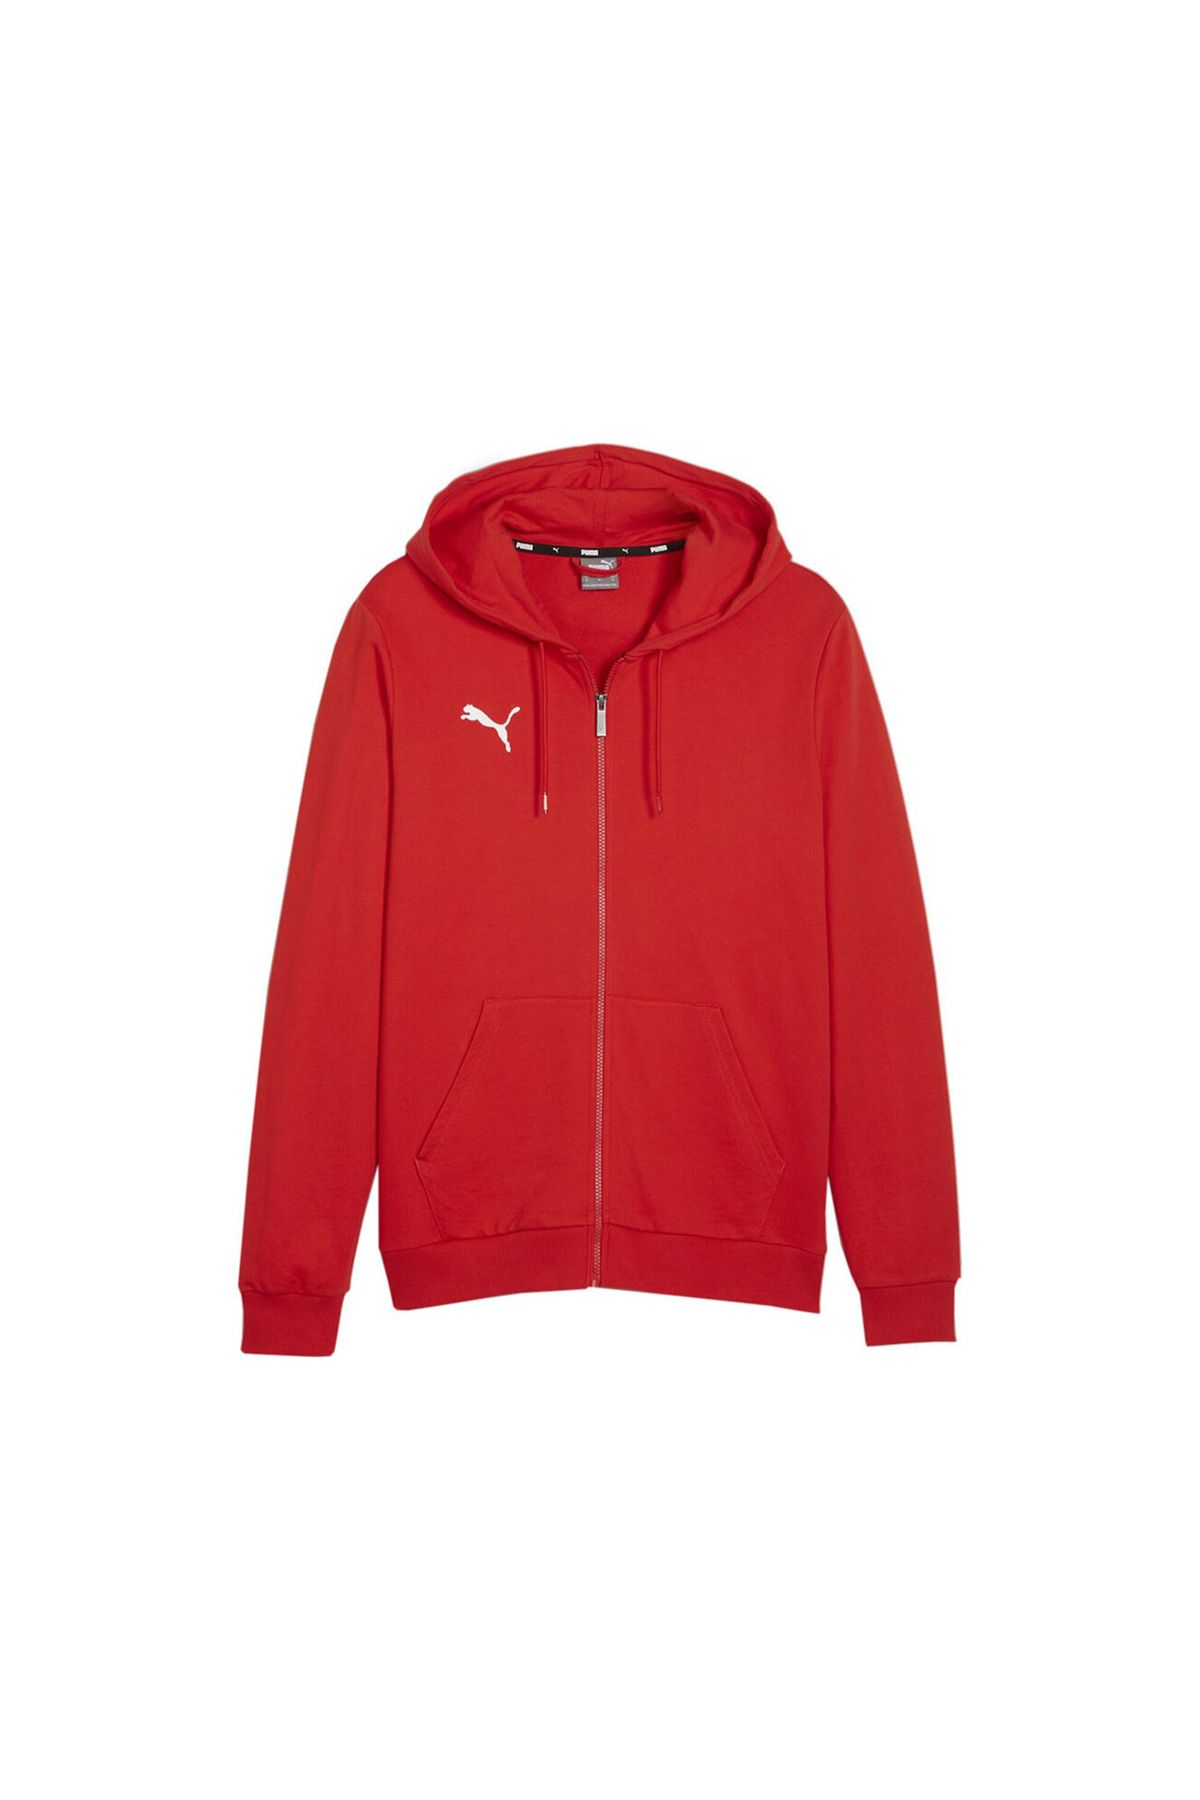 Puma Casuals Hooded Jacket Erkek Futbol Ceketi 65859501 Kırmızı